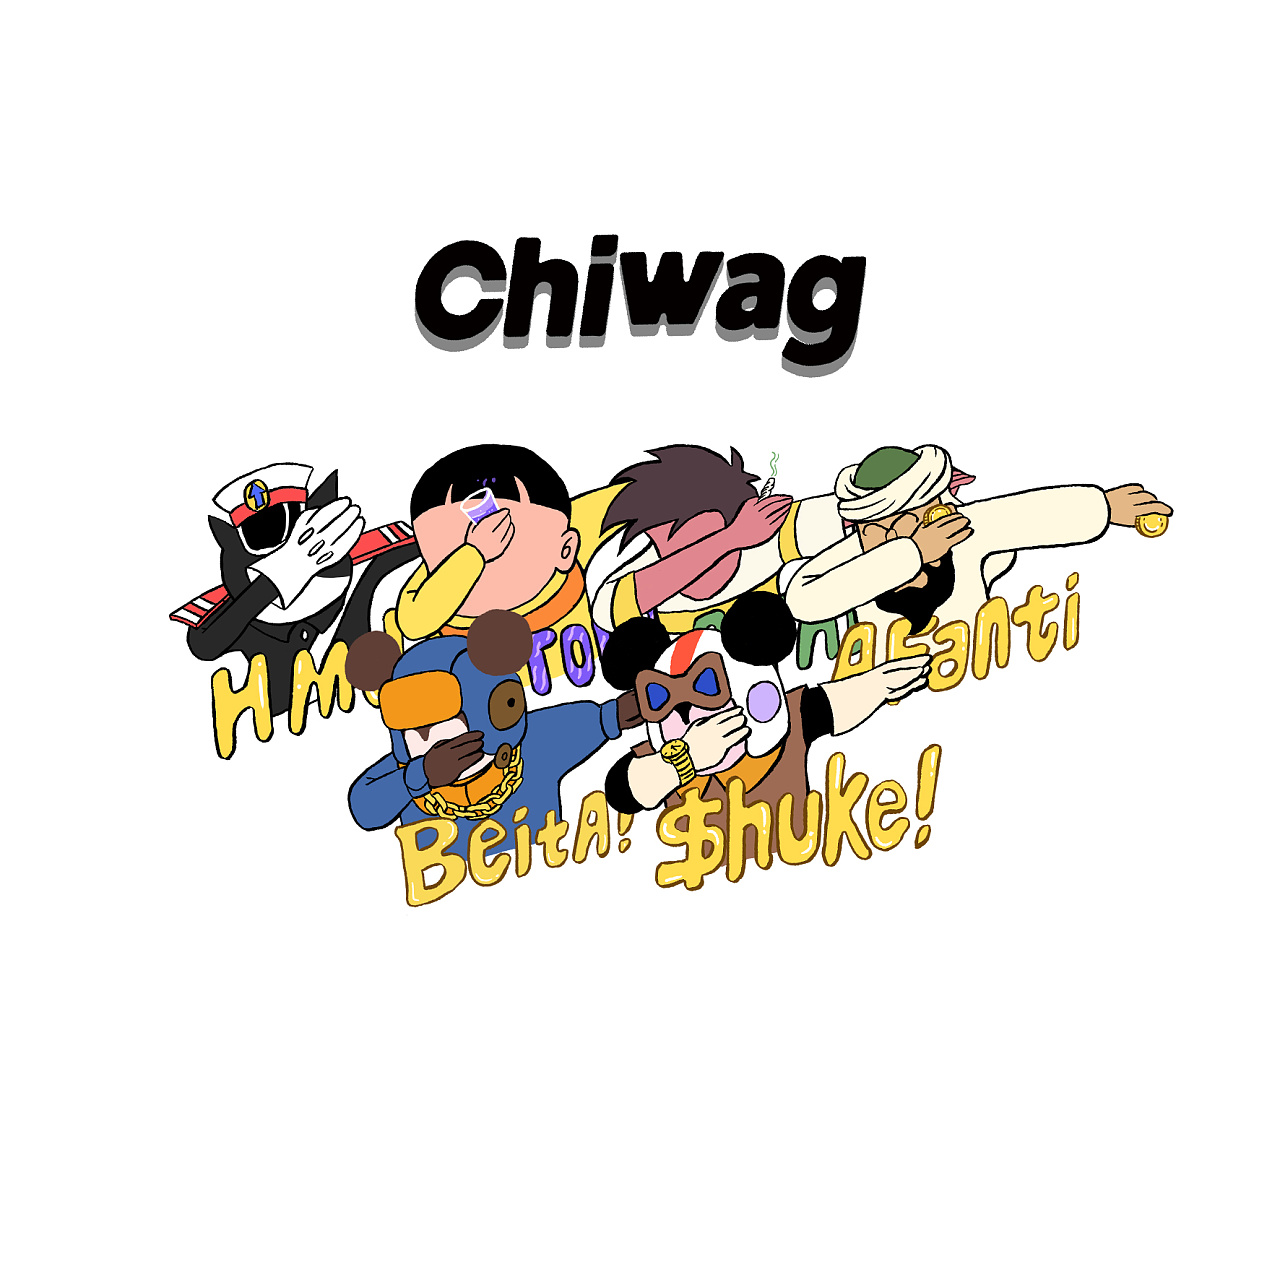 chiwag贴纸,中国80年代动画和hiphop元素碰撞!